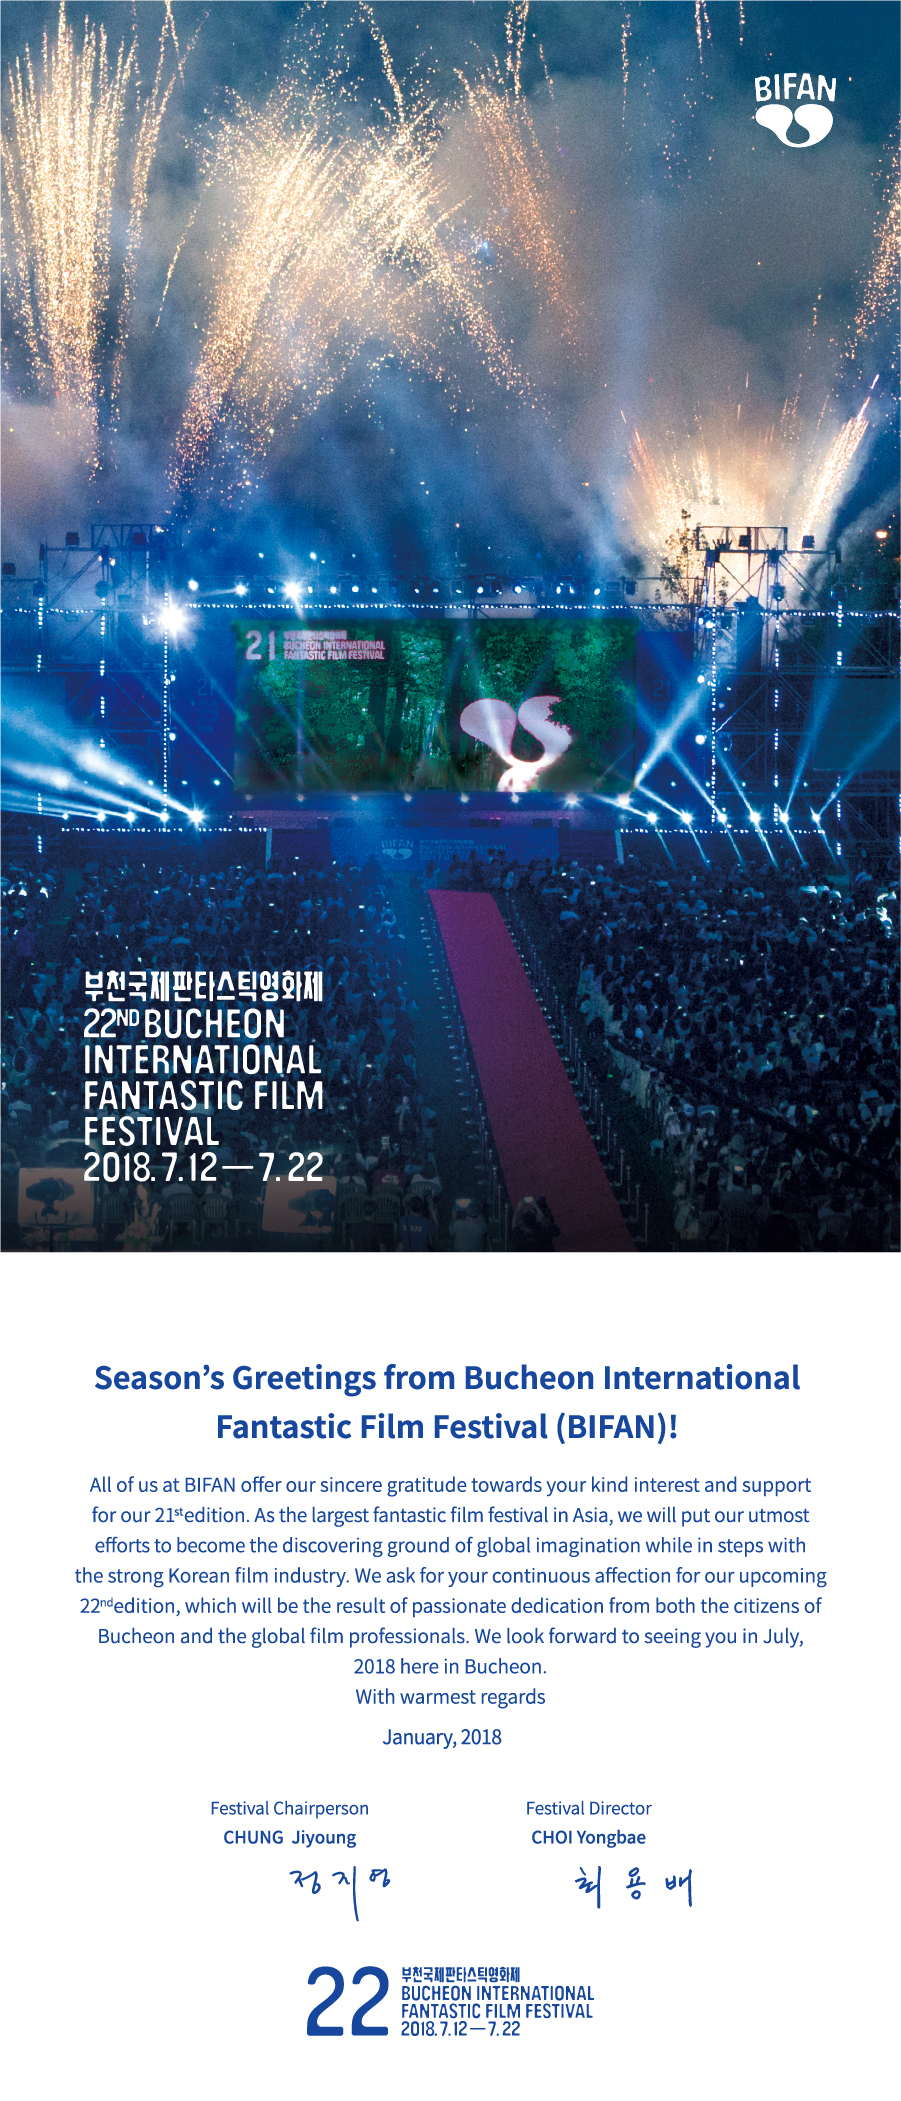 
Season's Greetings from Bucheon International Fantastic Film Festival (BIFAN)!